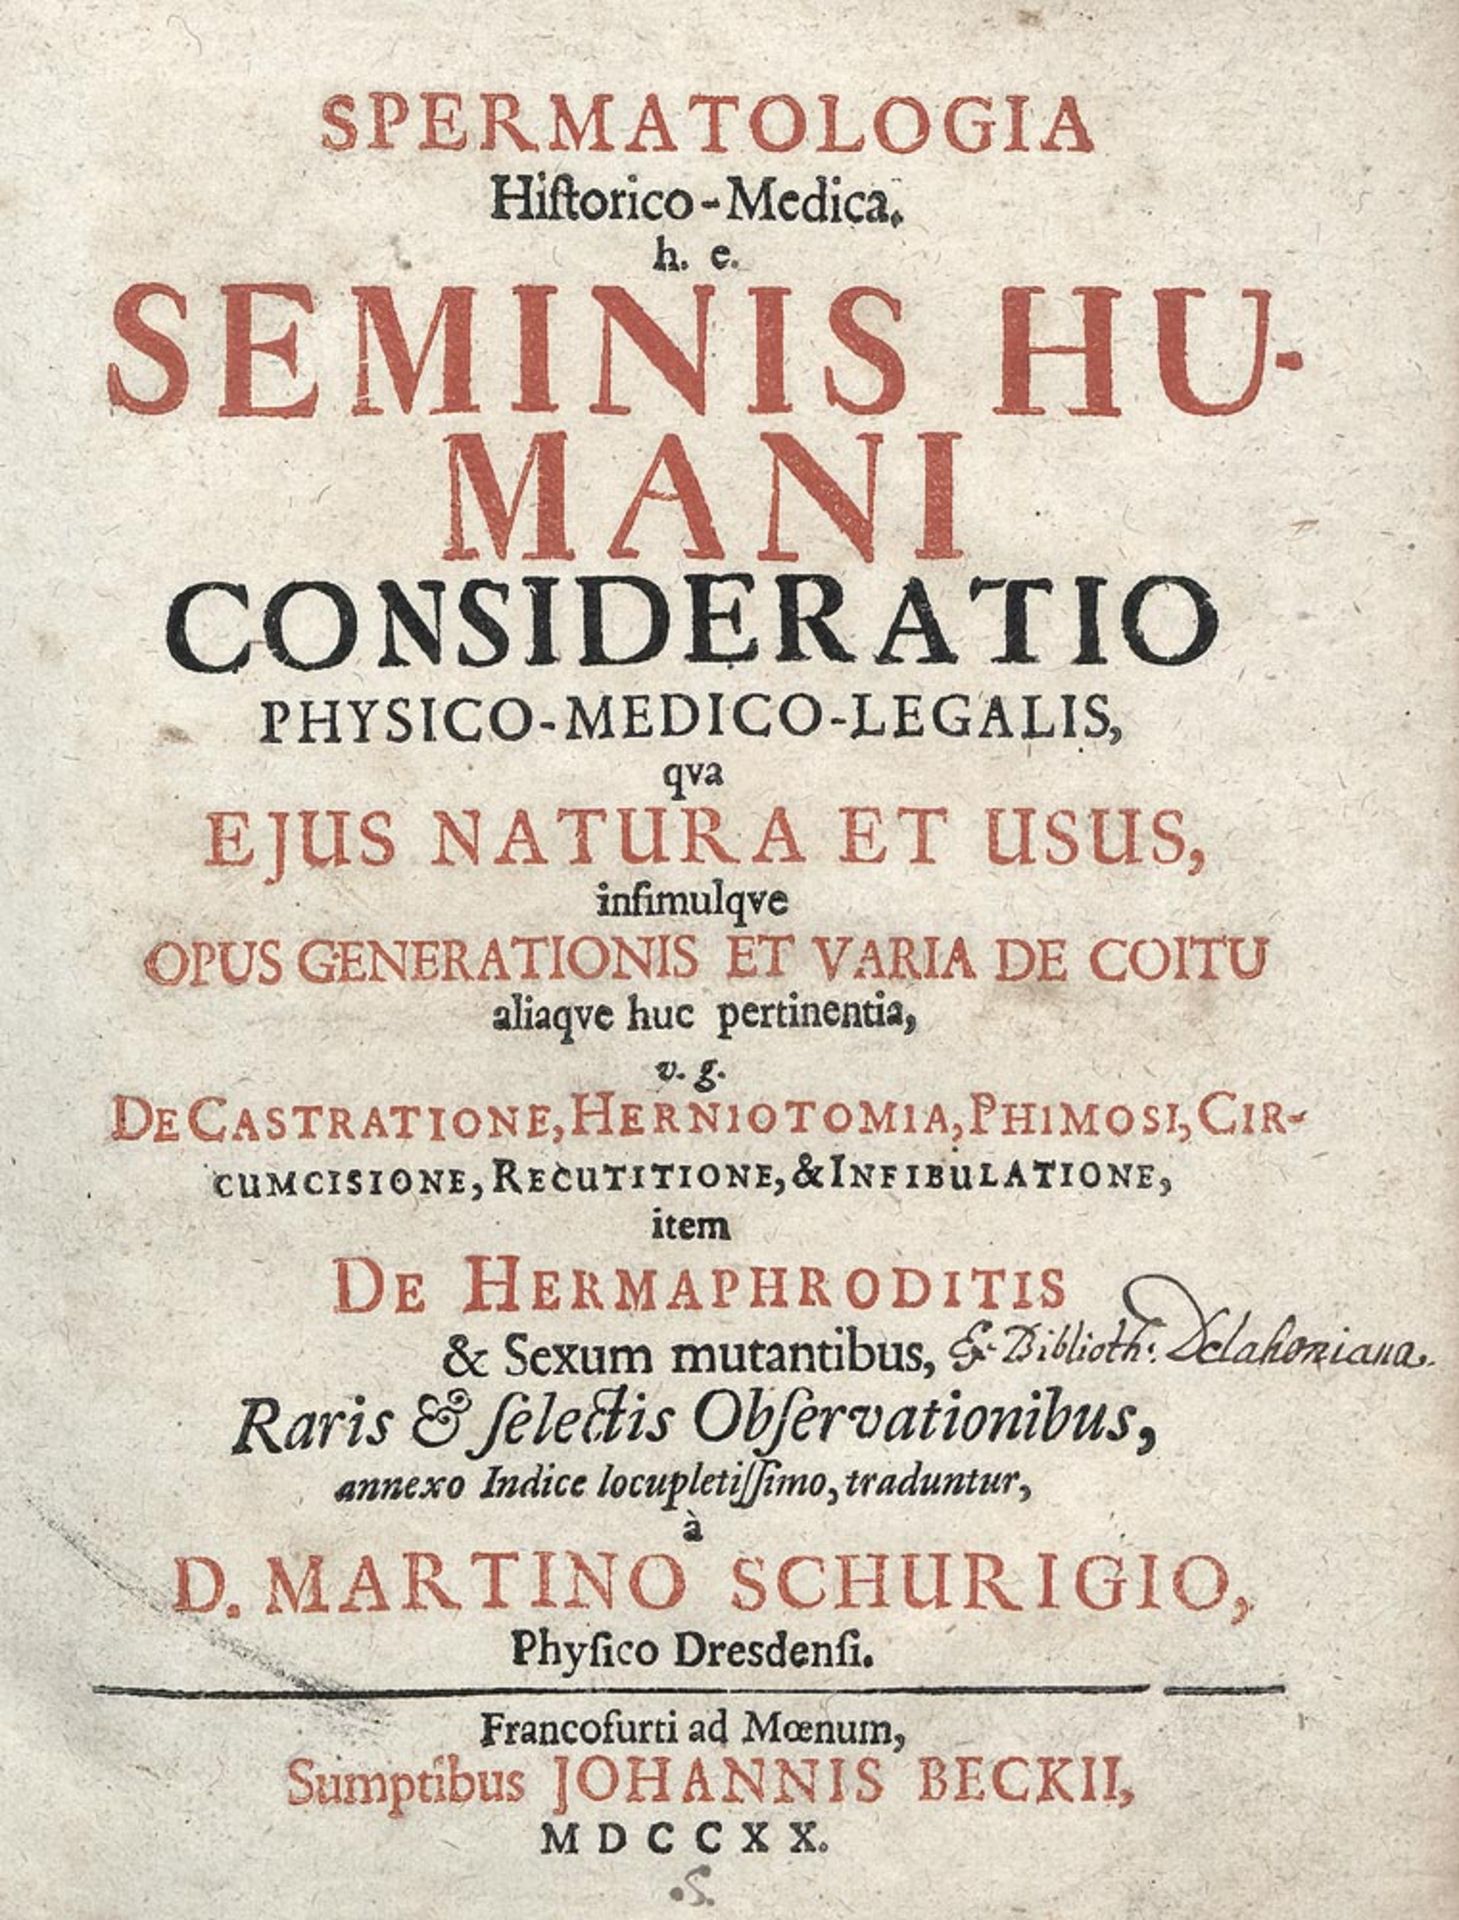 Schurig, Martin: Spermatologia historico-medica